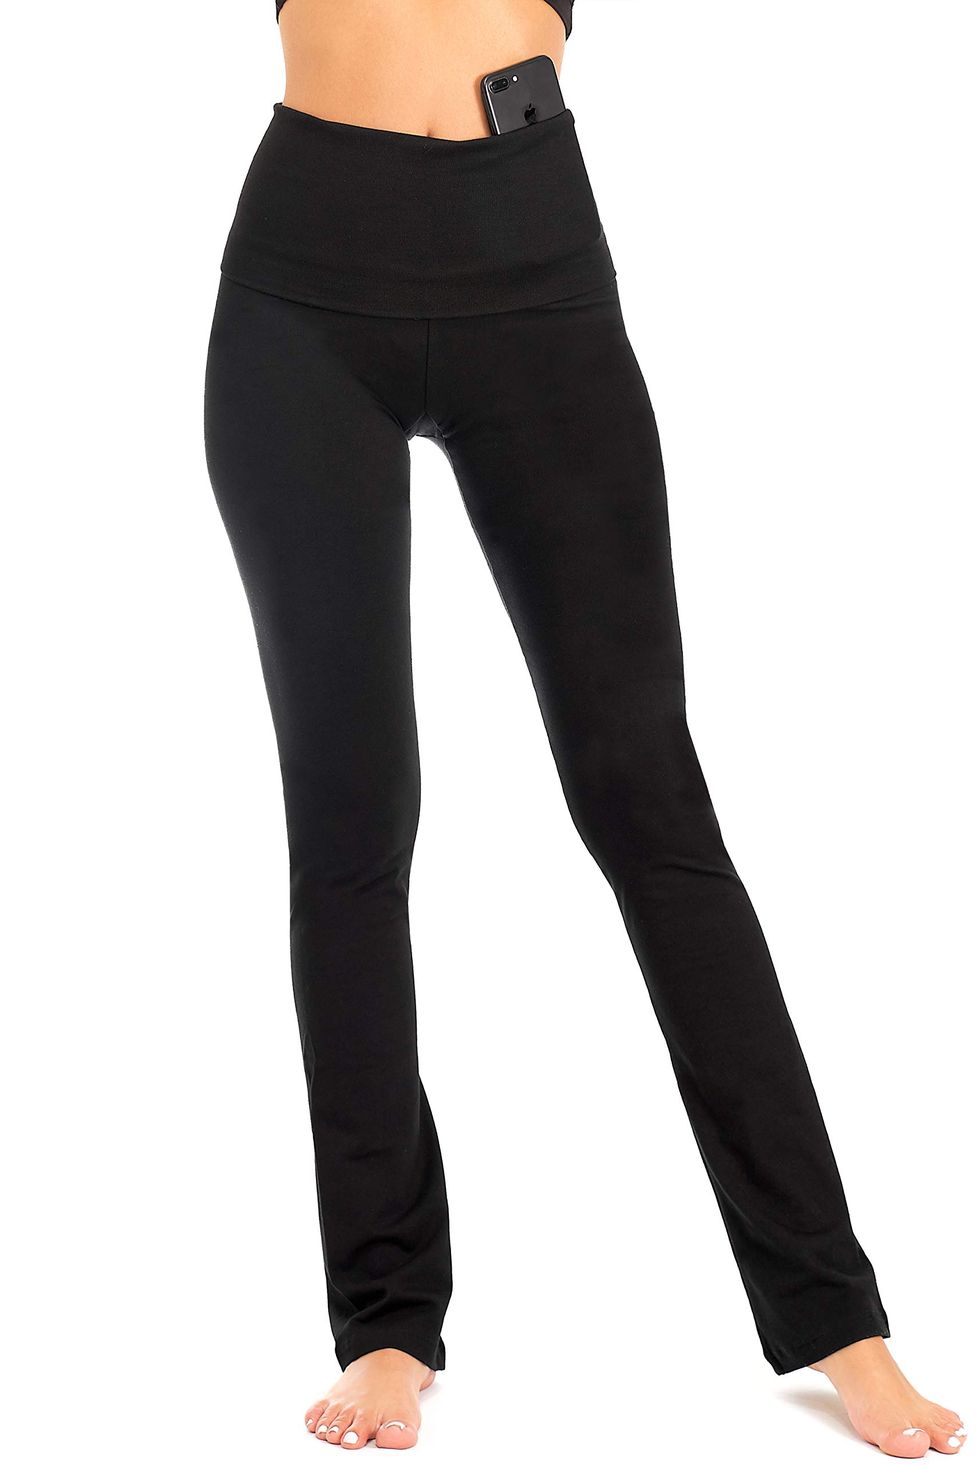 YOGA Pants Women Stretch Foldover Bootcut High Waist Slim Leggings Active  Pants